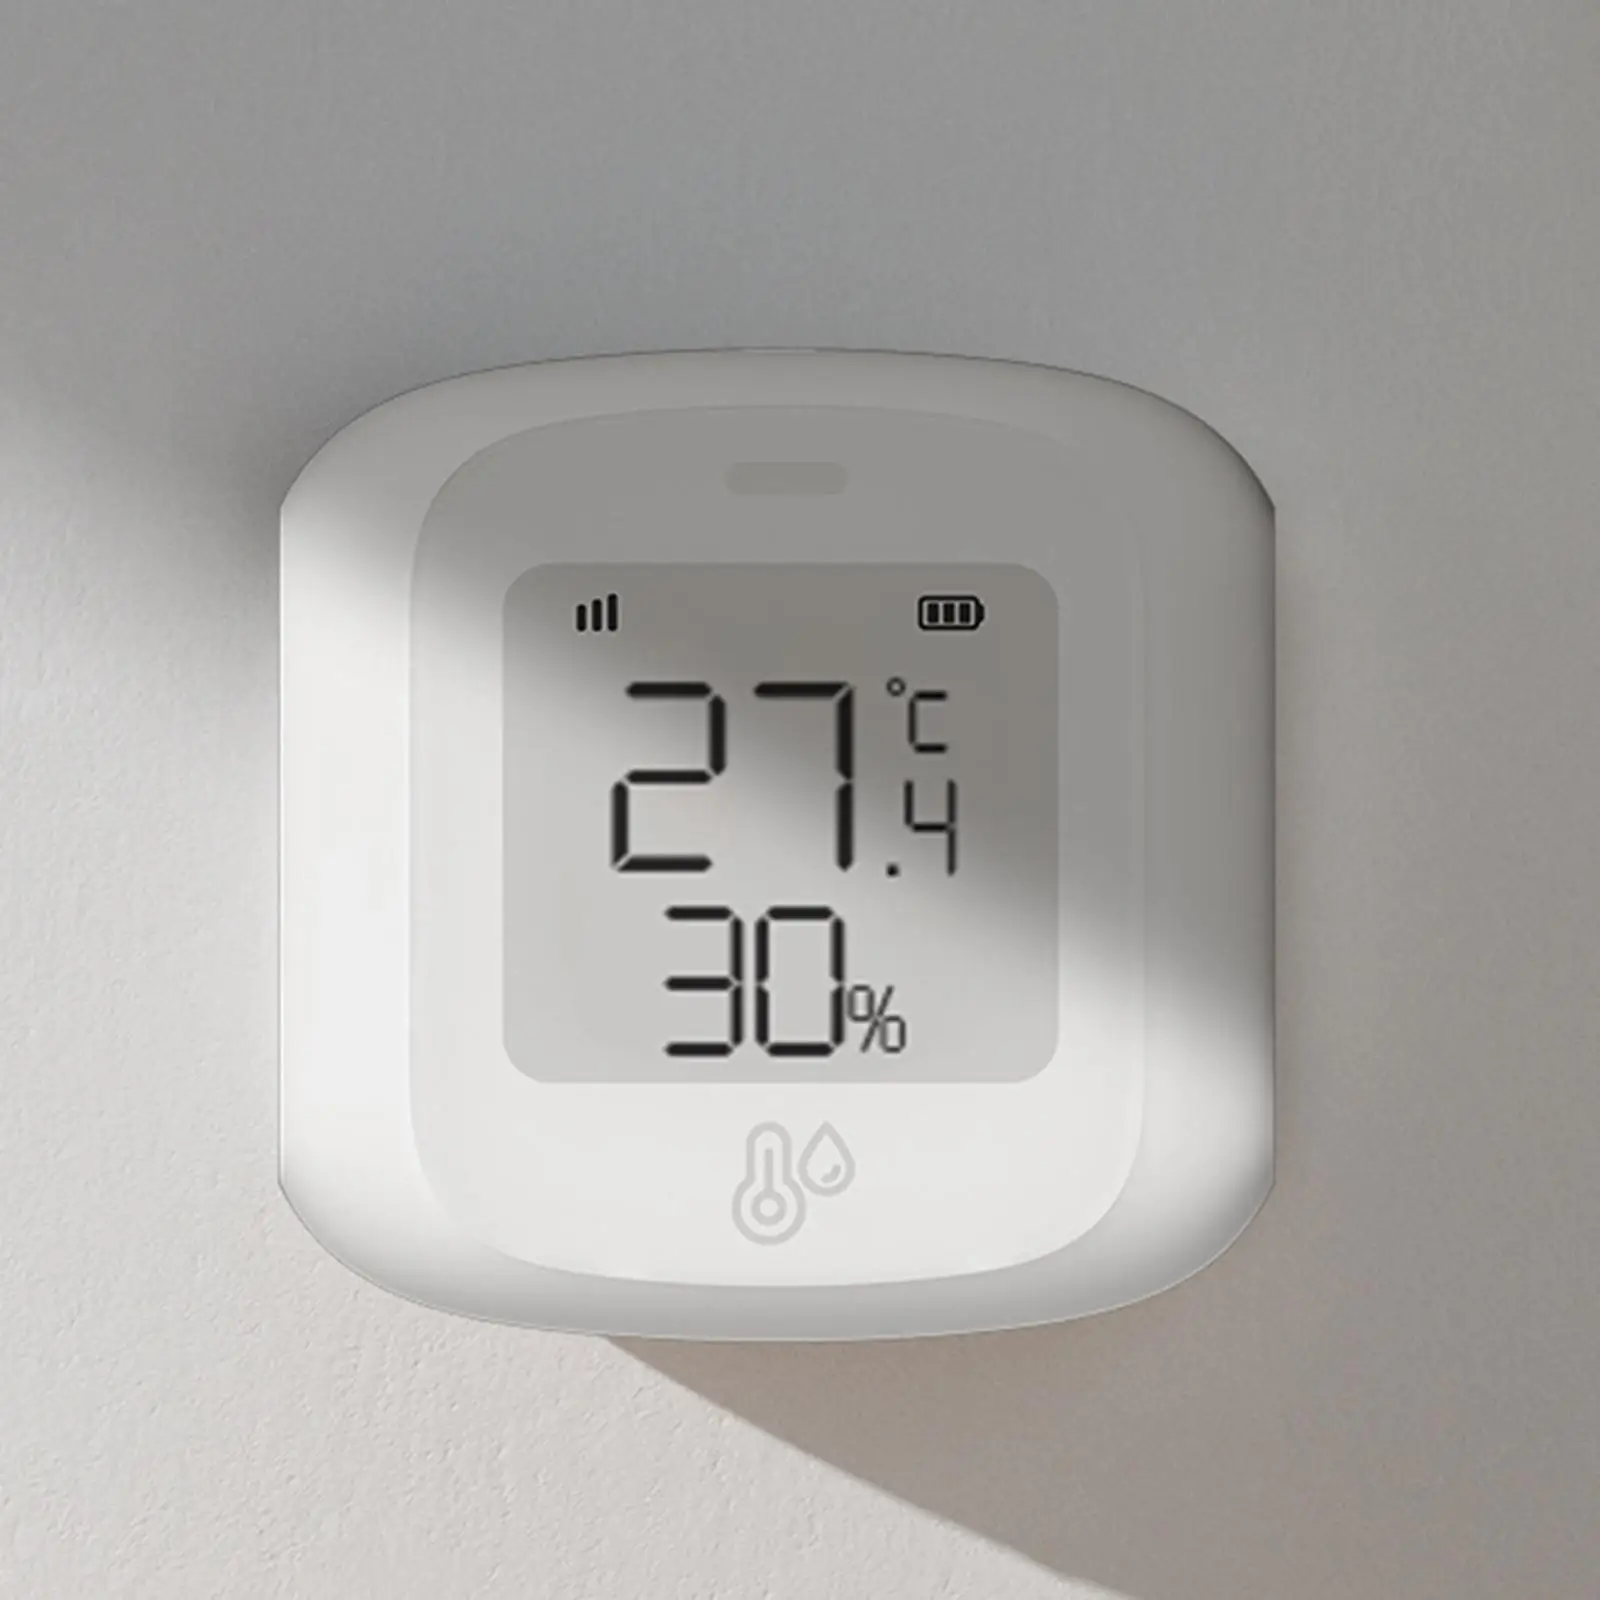 LCD Display Emperature and Humidity Sensor Outdoor Indoor Household Thermometer for Garden Pools Refrigerator Door Spas Office